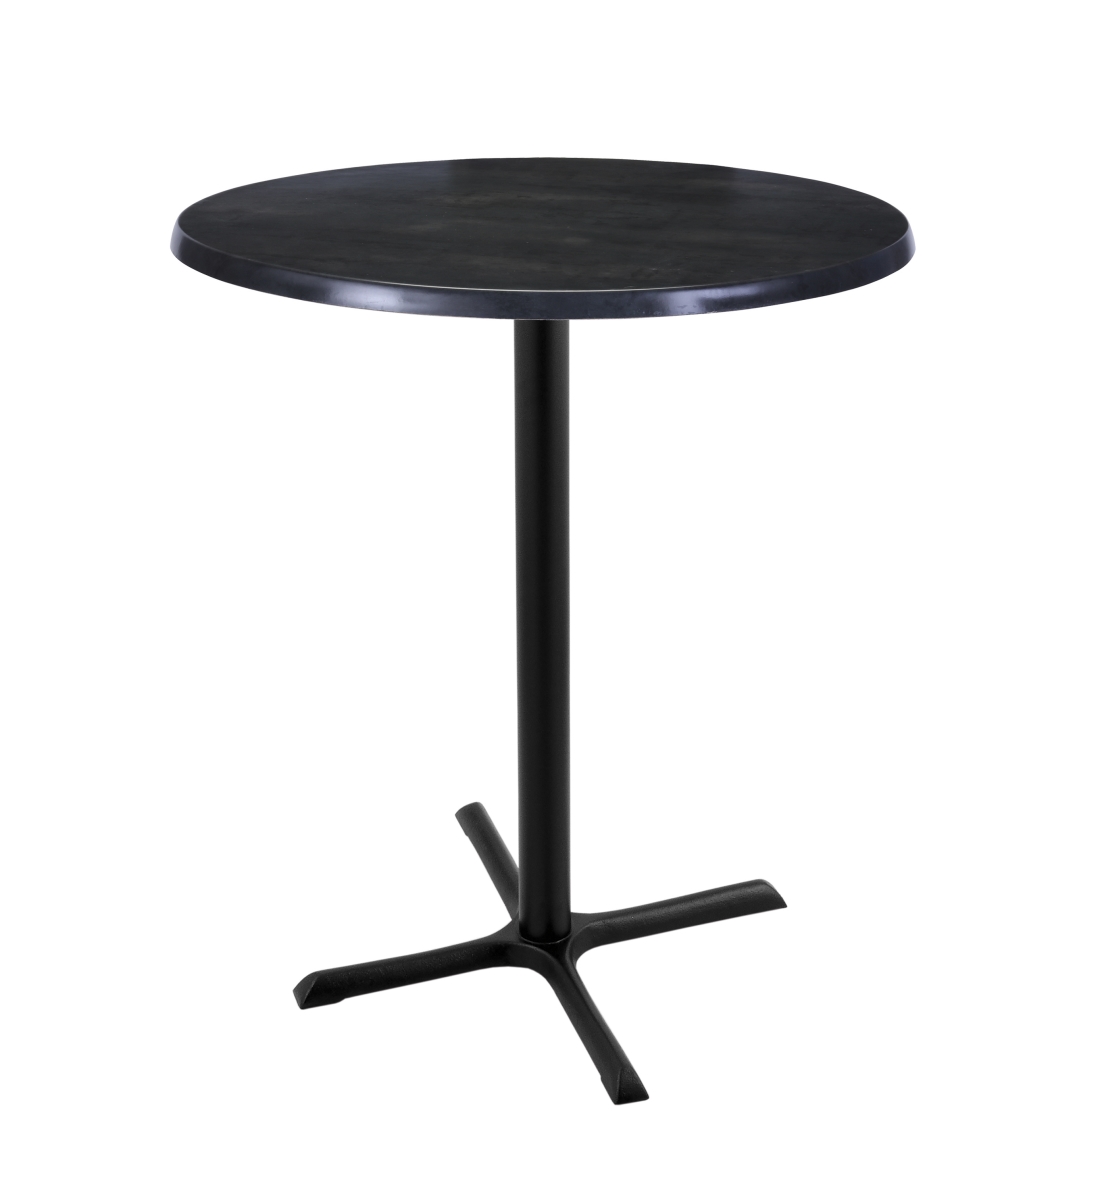 Od211-3042bwod30rblkstl 42 In. Black Table With 30 In. Diameter Indoor & Outdoor Black Steel Round Top